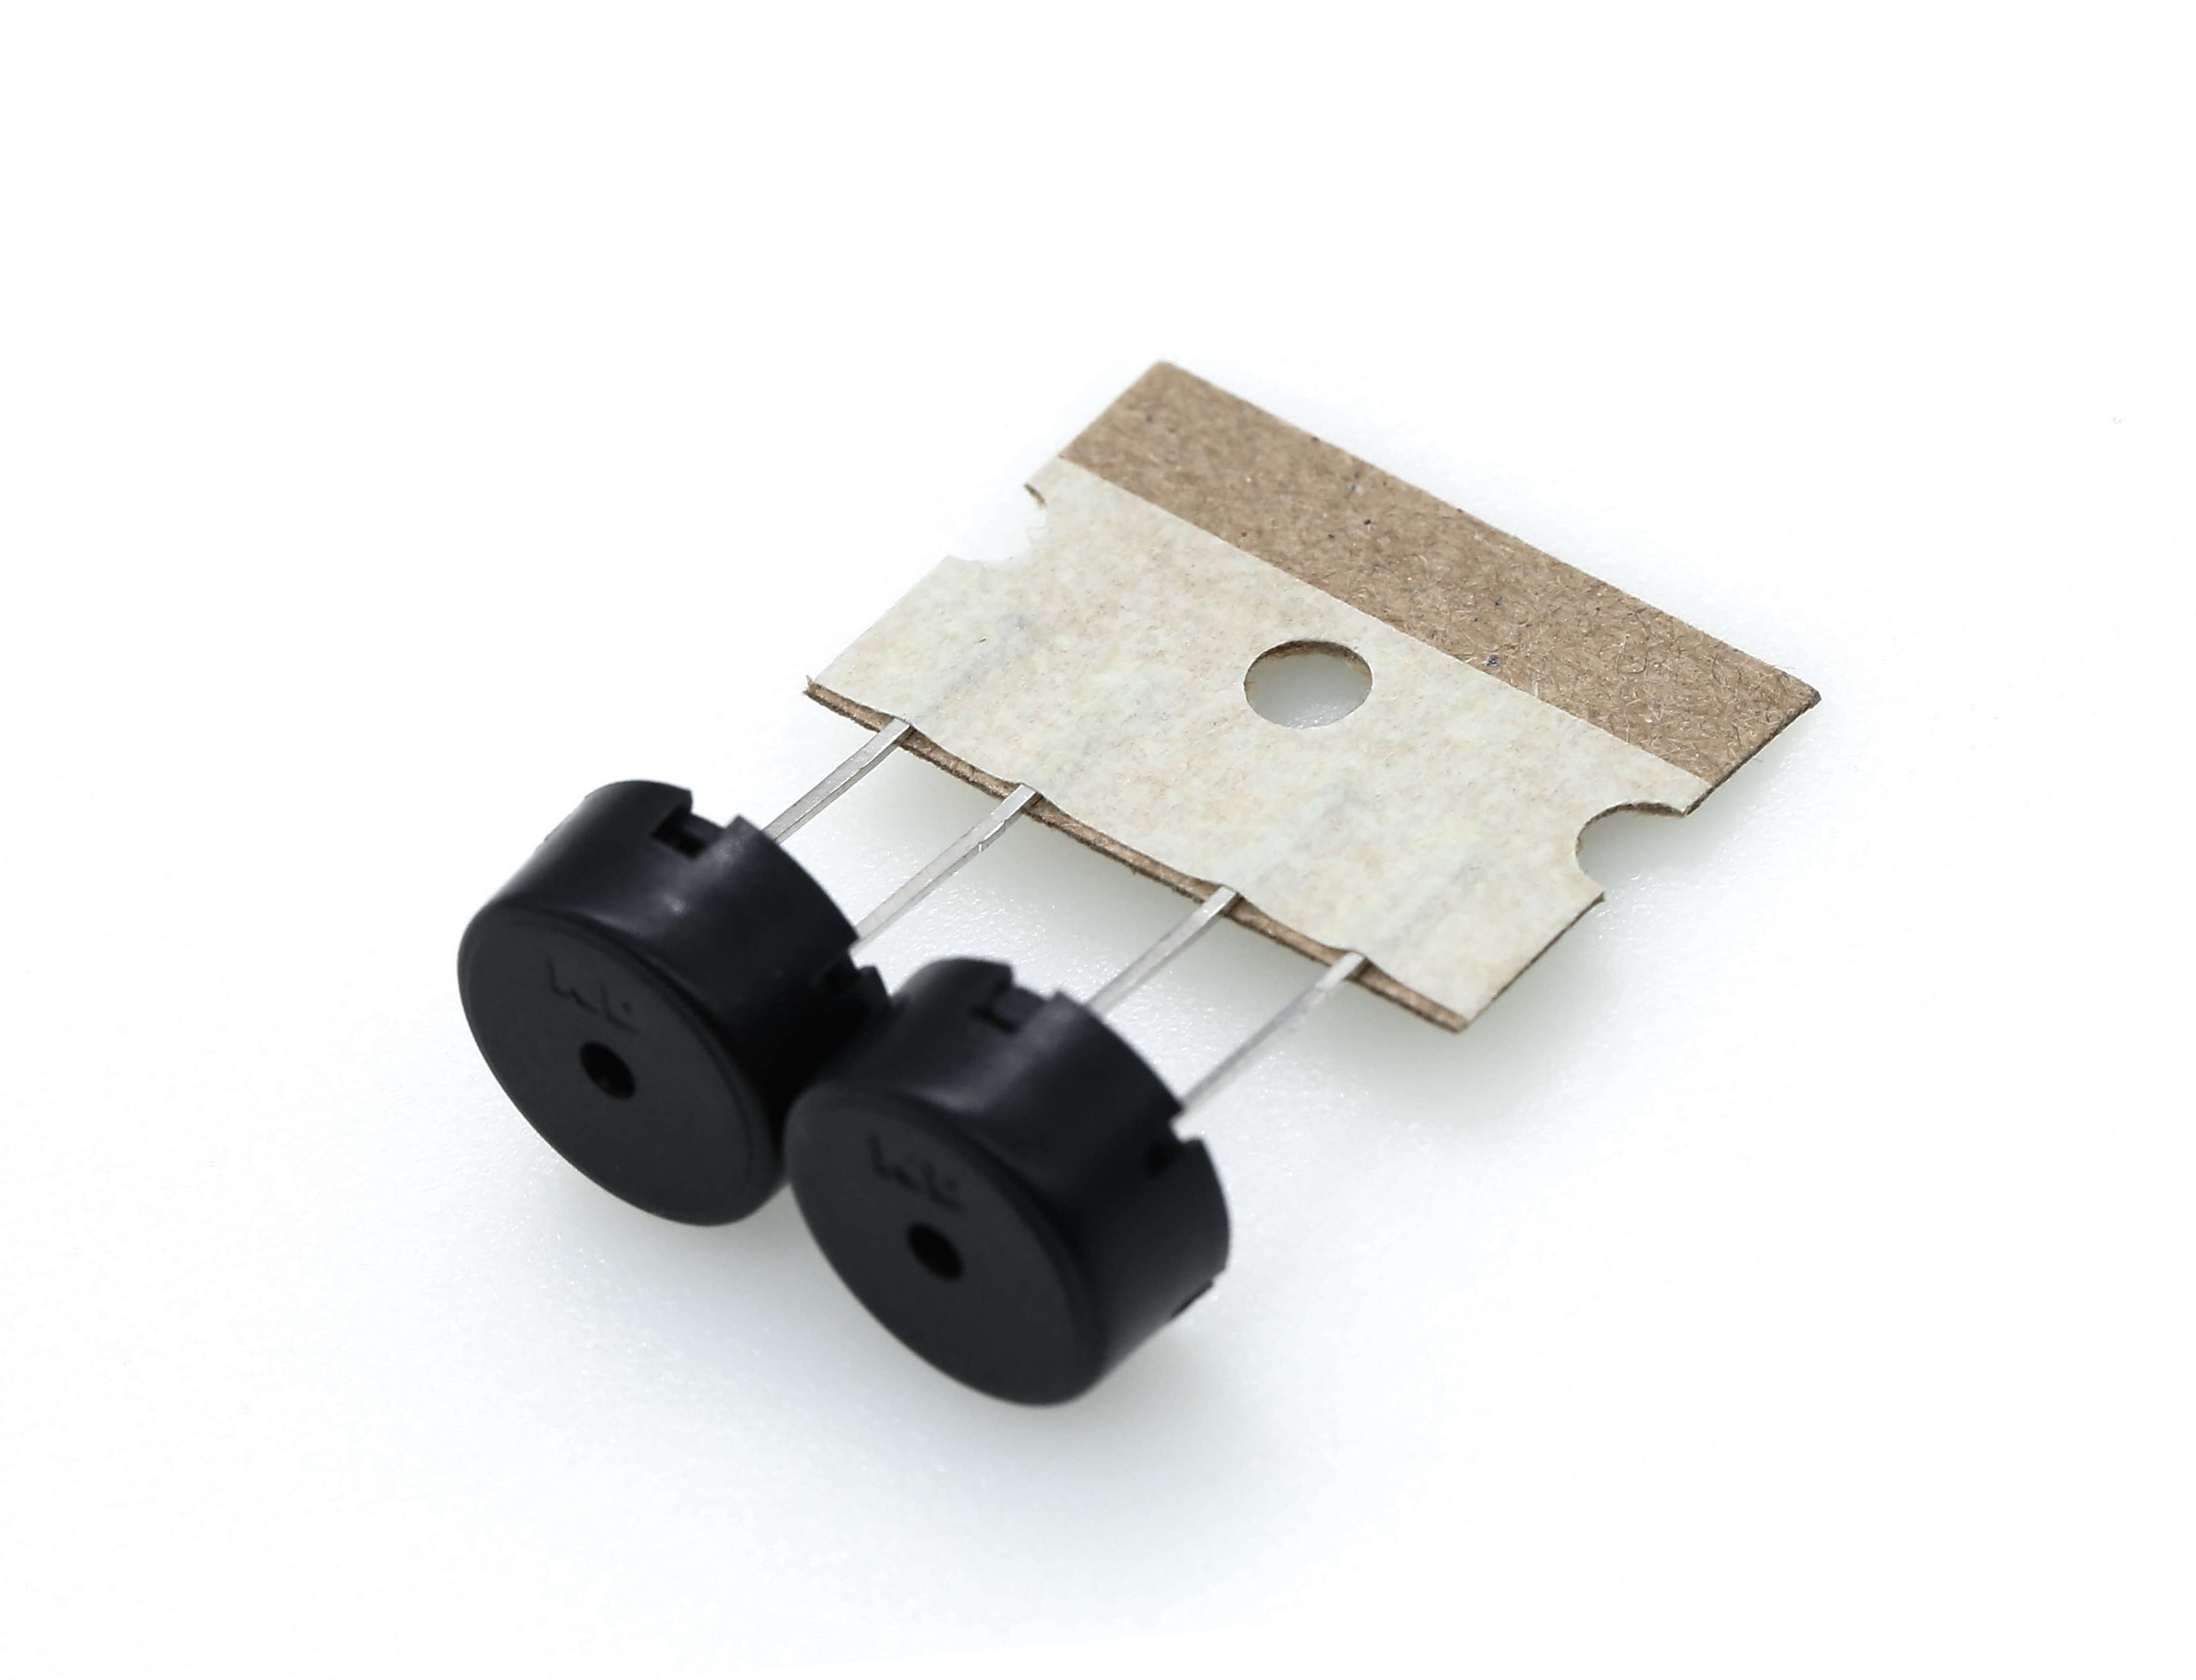 Zumbador piezoeléctrico pasivo de 13 mm Tipo de cinta adhesiva para electrodomésticos